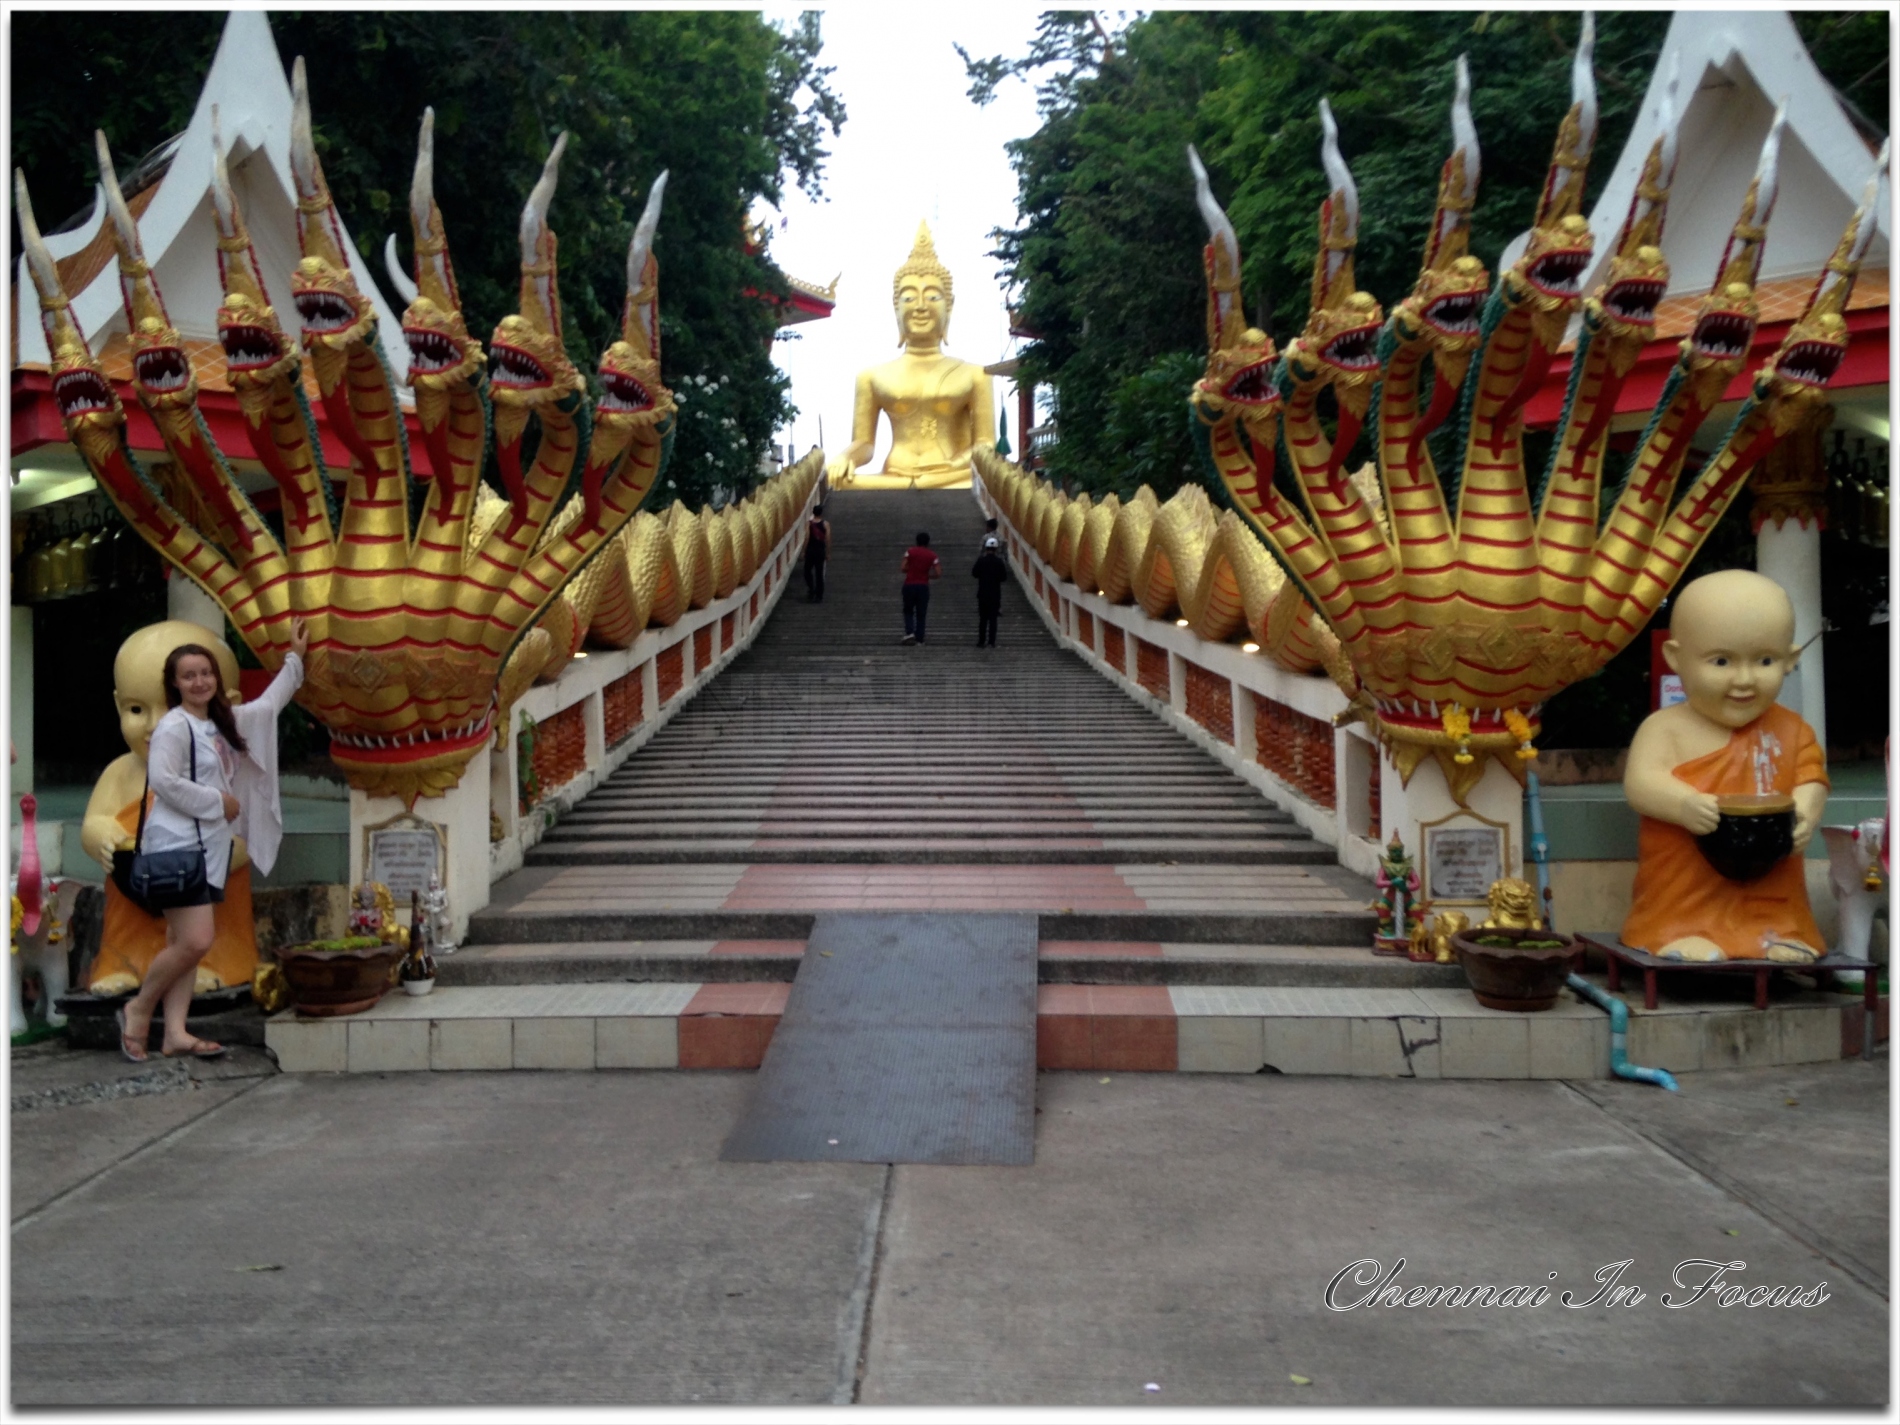 Wat Phra Yai Temple, Big Buddha Statue, Pattaya, Thailand